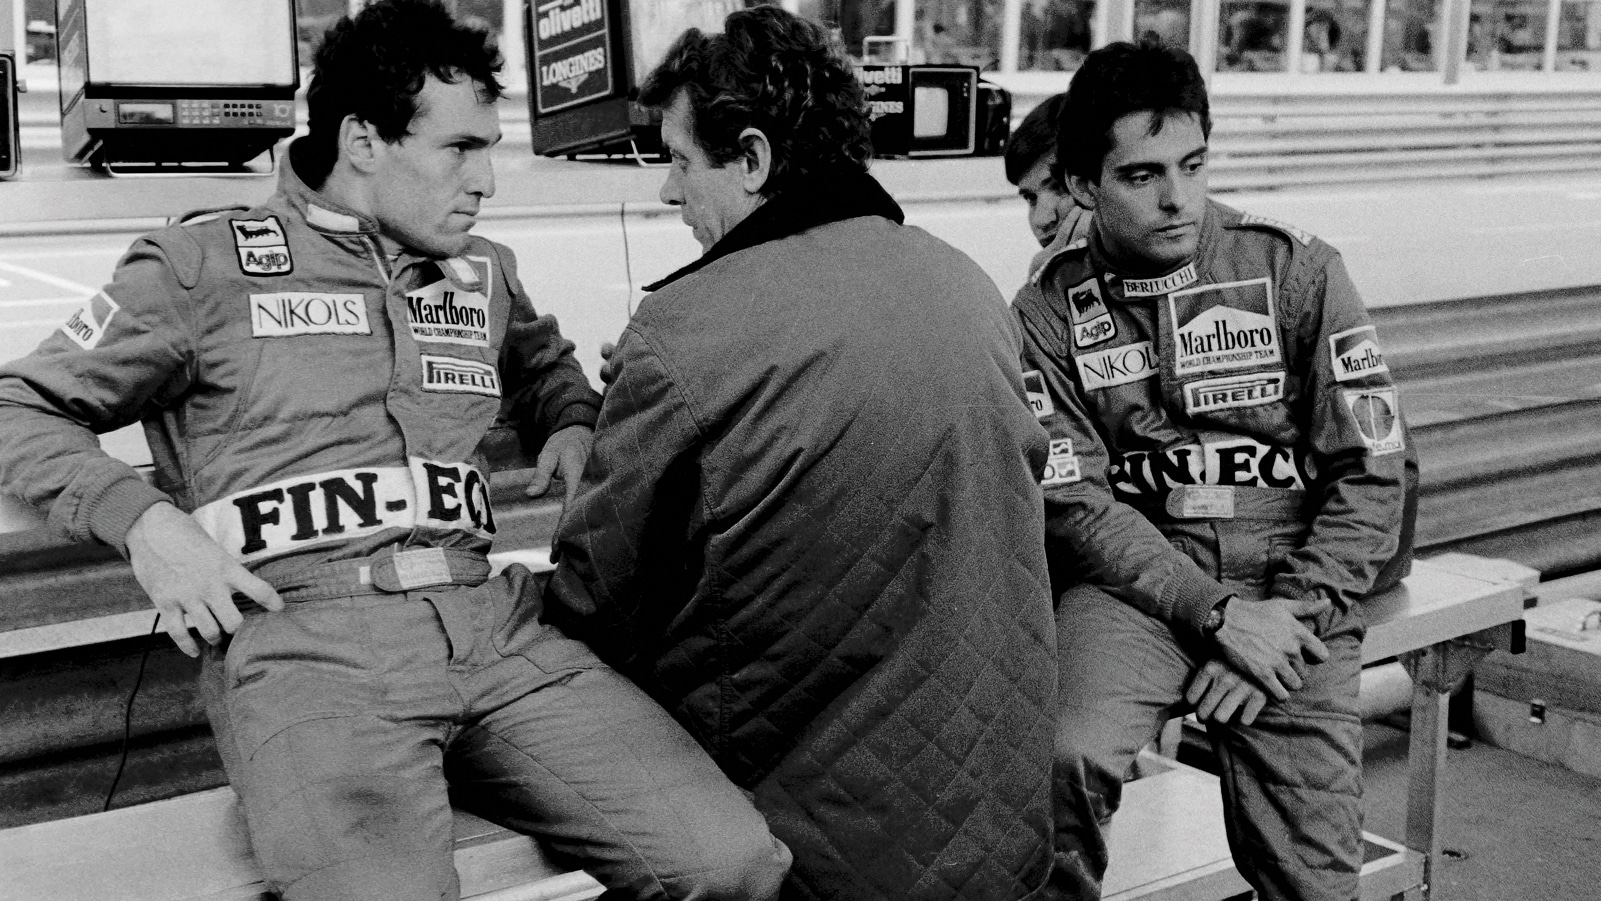 Dallara drivers de Cesaris and Caffi at the 1989 Monaco Grand Prix